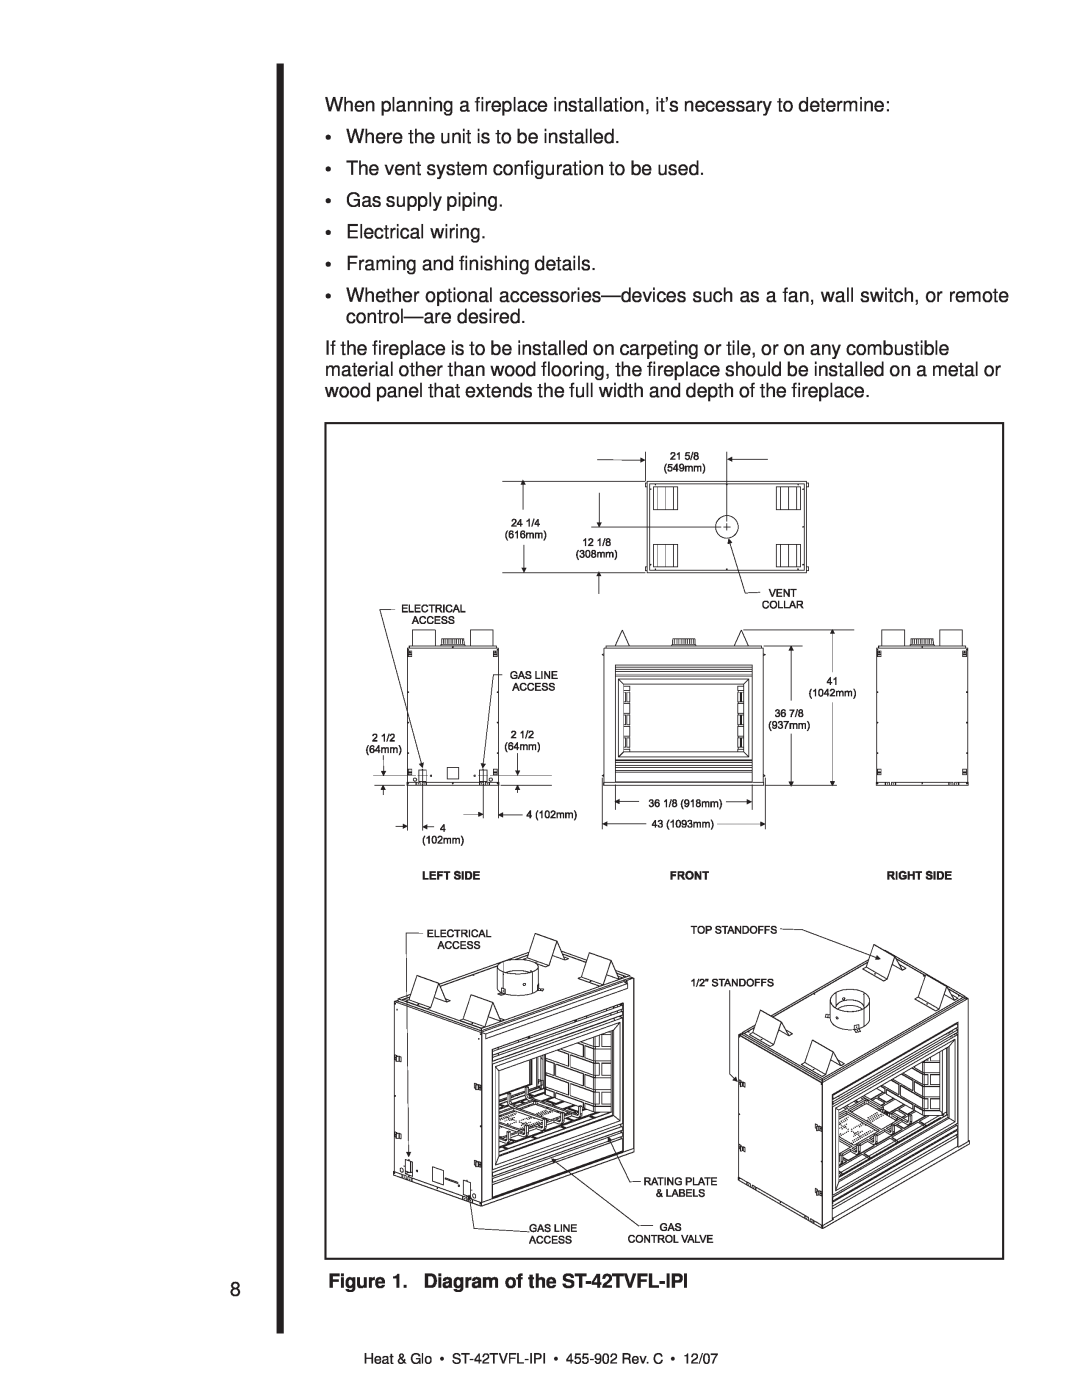 Heat & Glo LifeStyle owner manual Diagram of the ST-42TVFL-IPI 